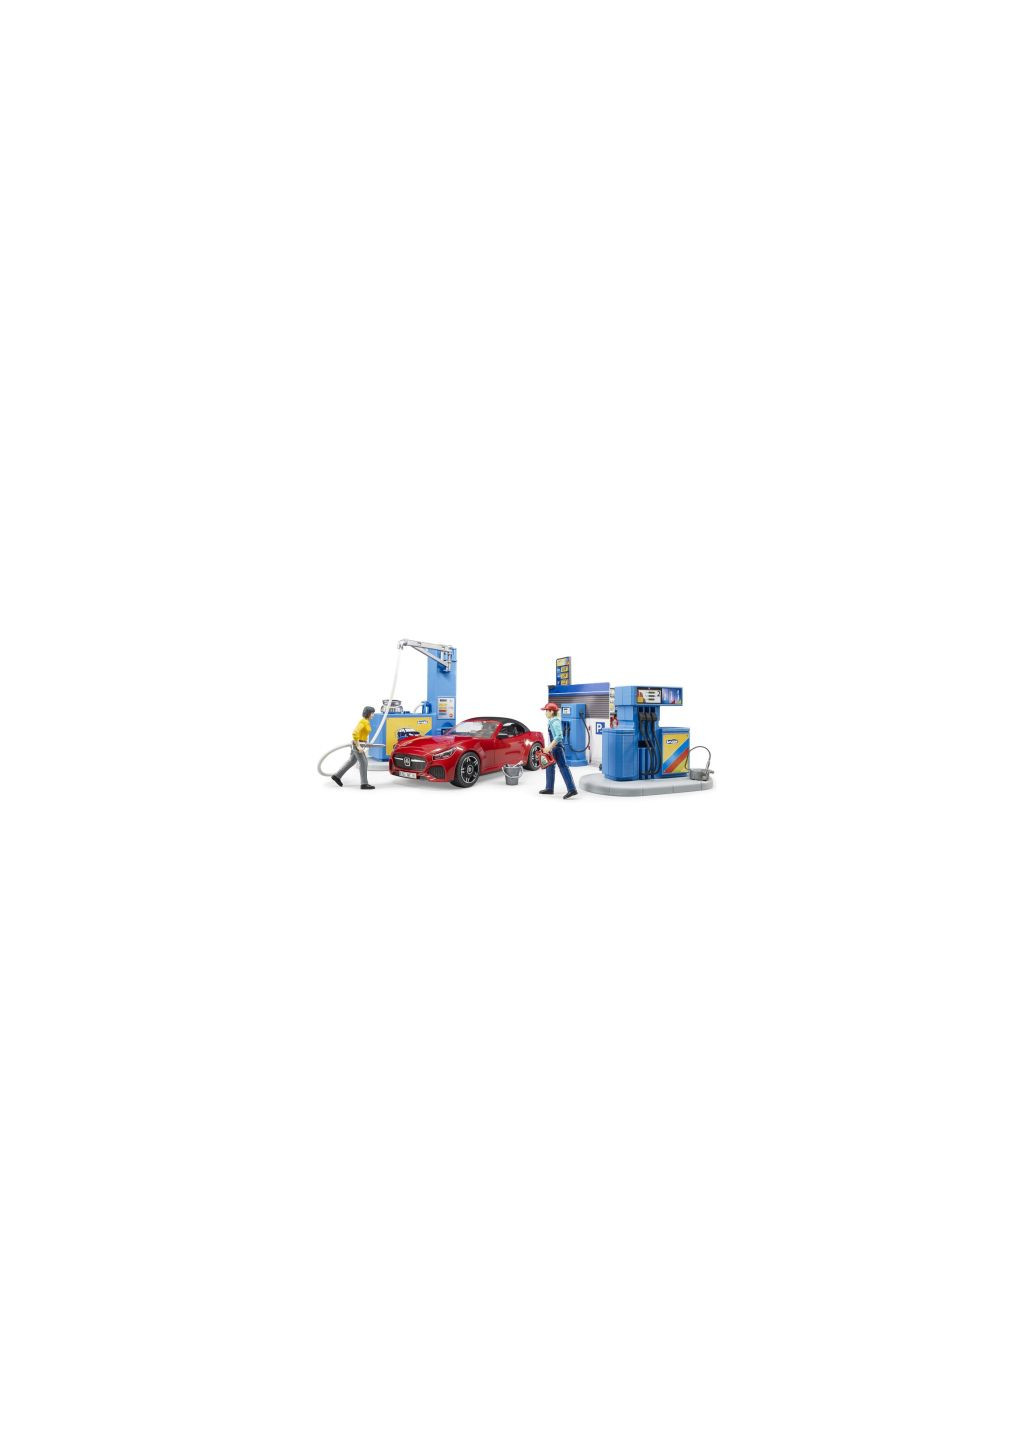 Игровой набор АЗС с автомойкой, автомобилем и фигурками (62111) Bruder азс з автомийкою, автомобілем та фігурками (275646551)